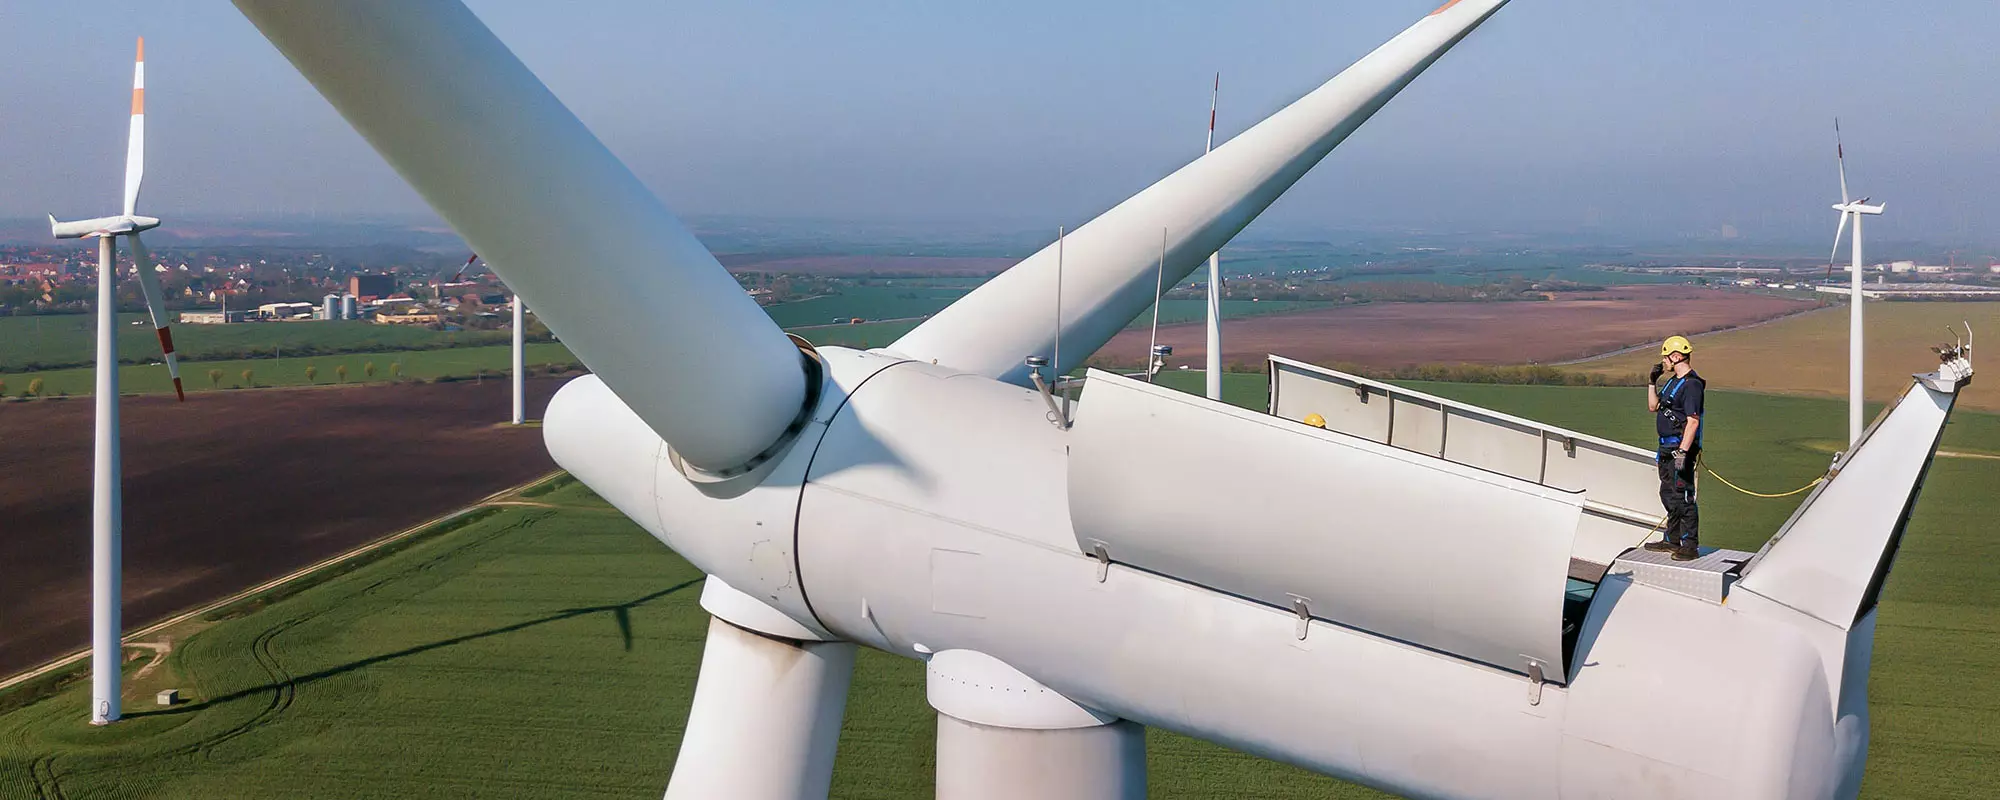 Windturbine-Mechanics Jobs in wind energy